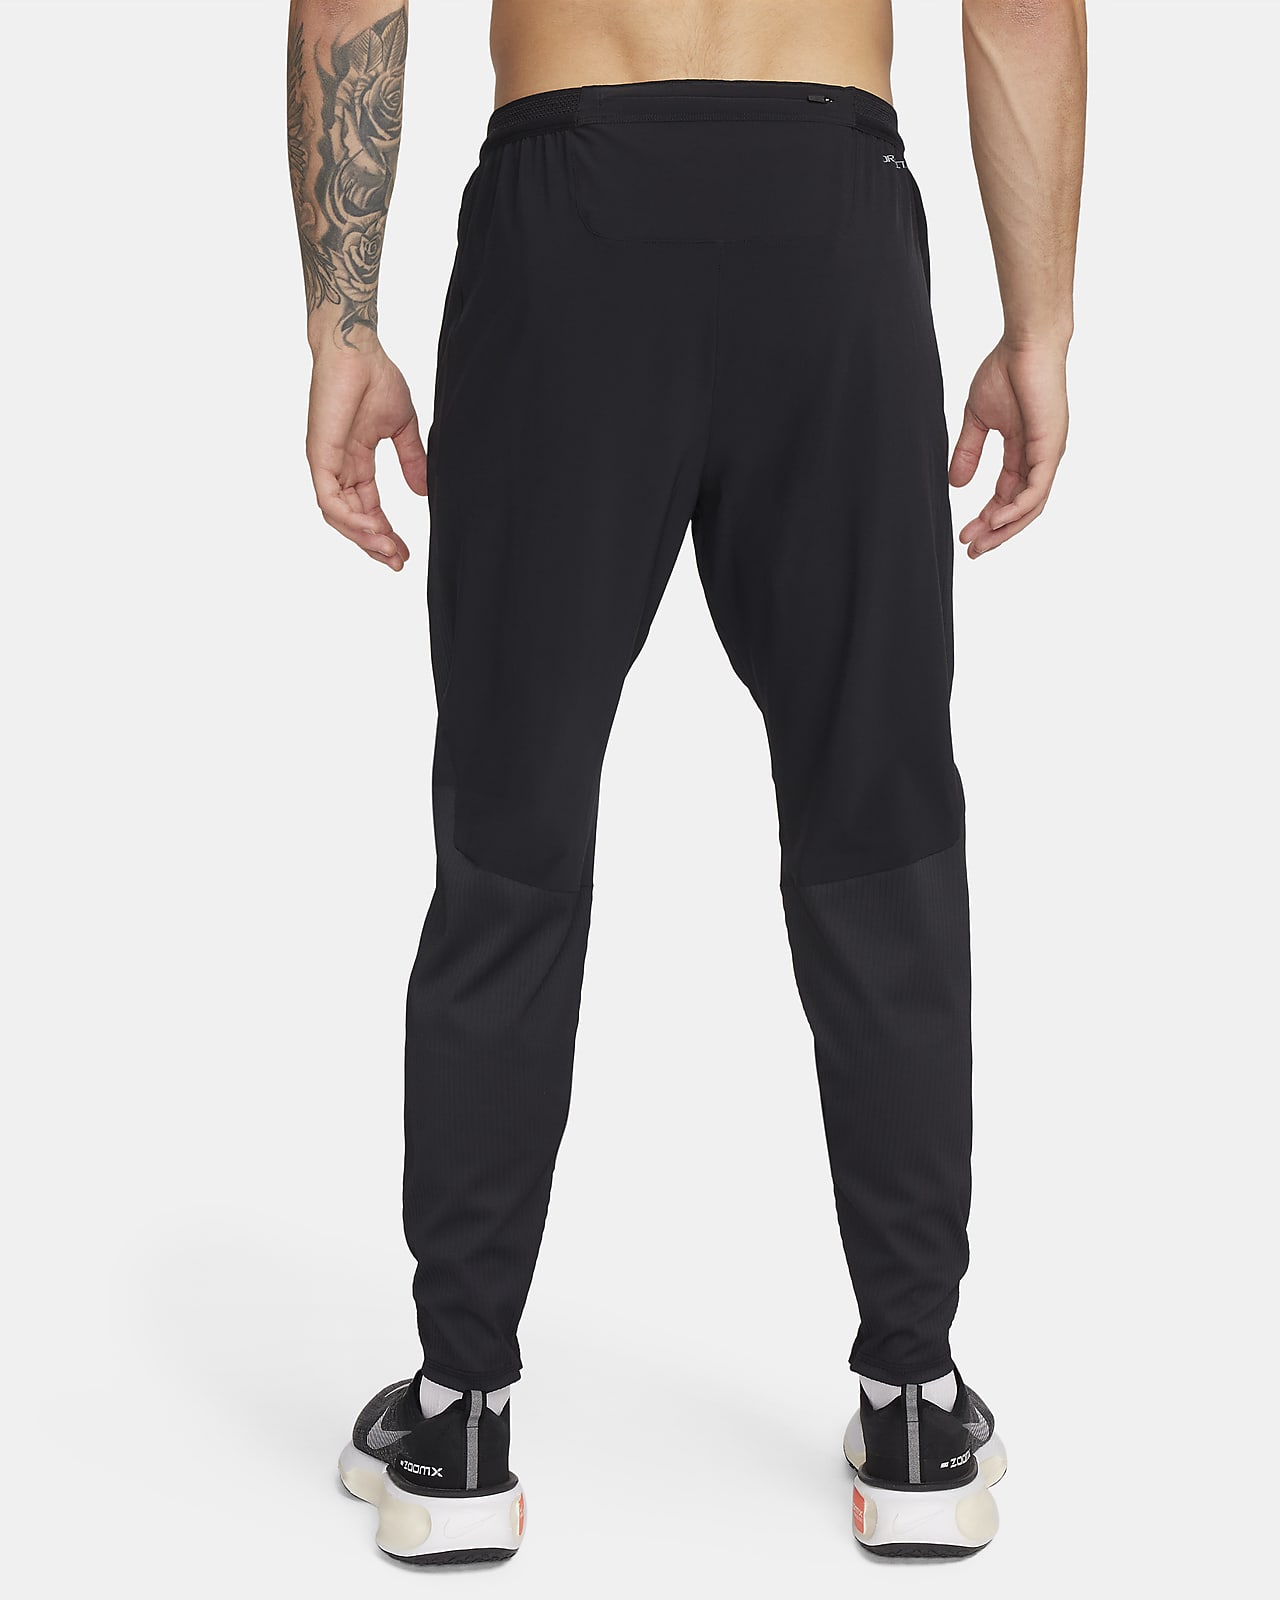 Nike Herren Hose M Nk Dfadv Aroswft Pant, Black/White, DM4615-010, XL :  : Fashion